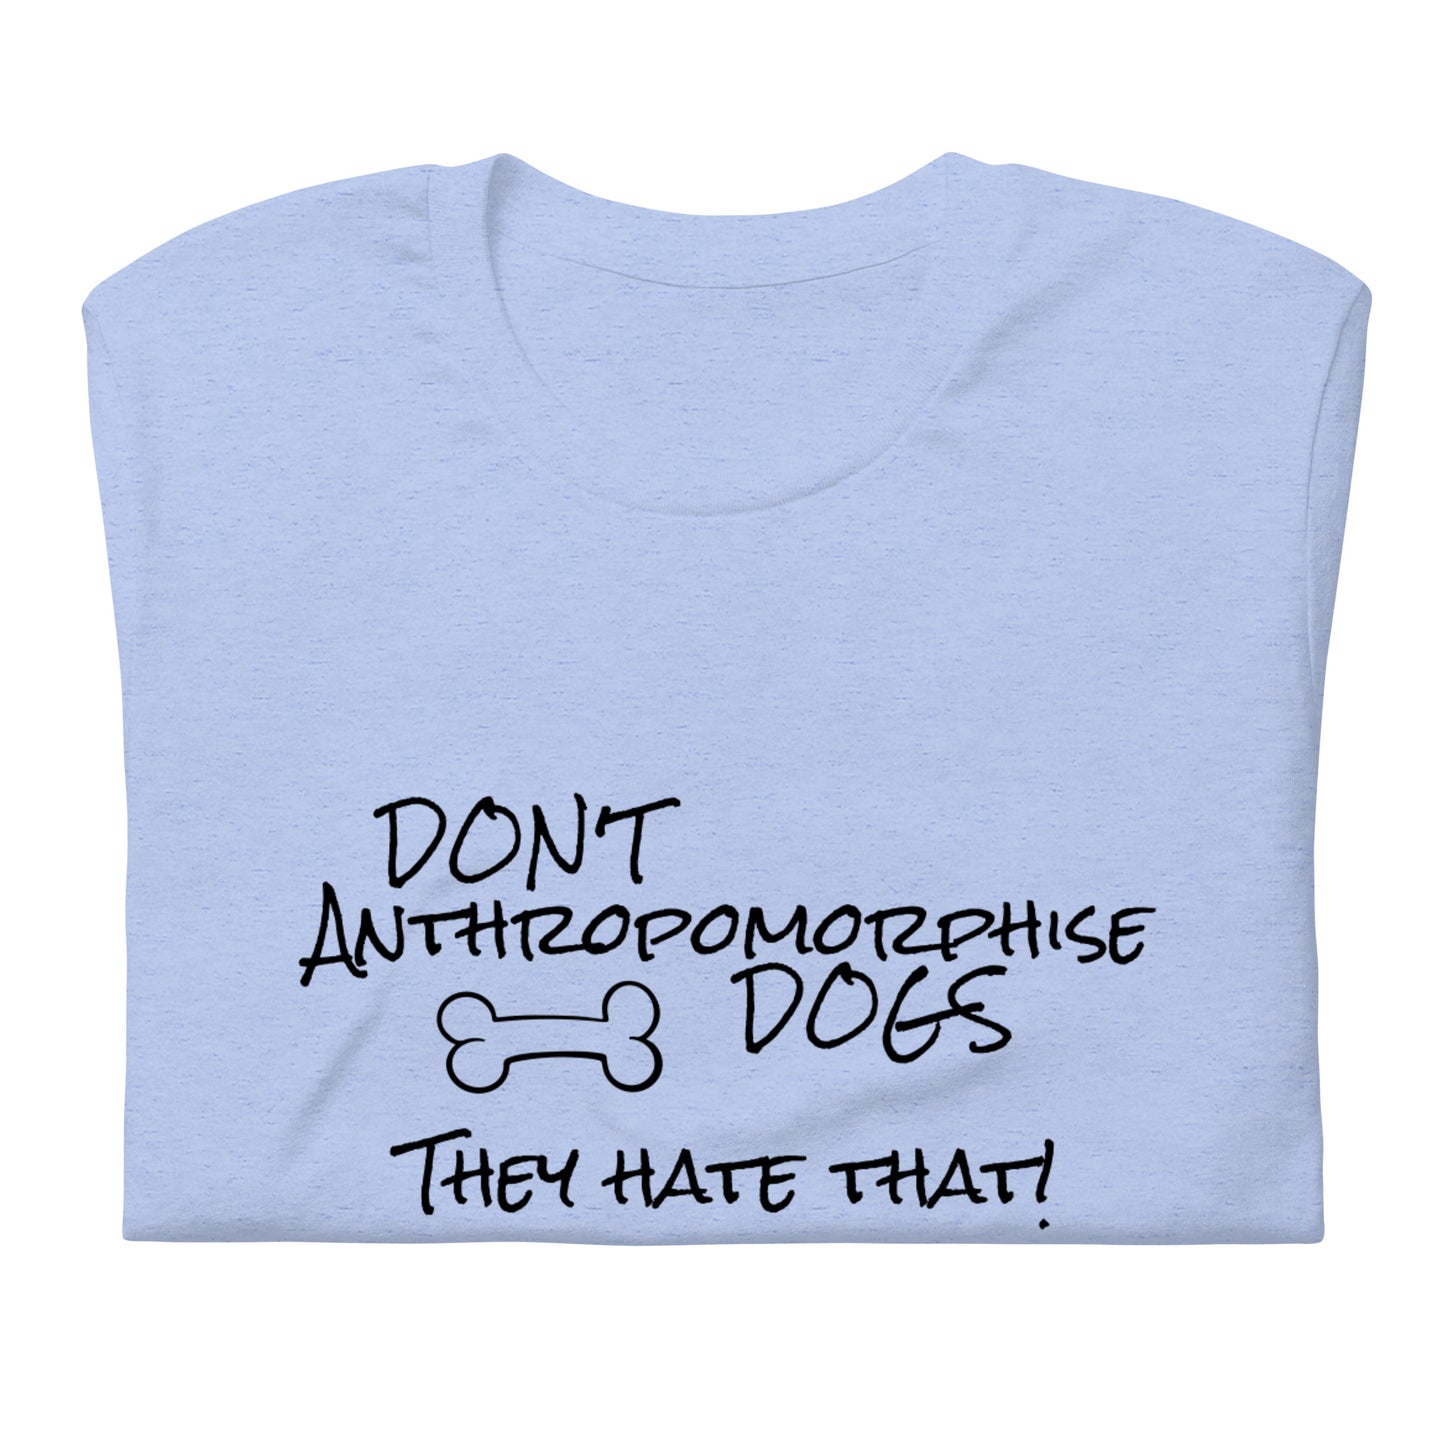 Don't anthropomorphise dogs